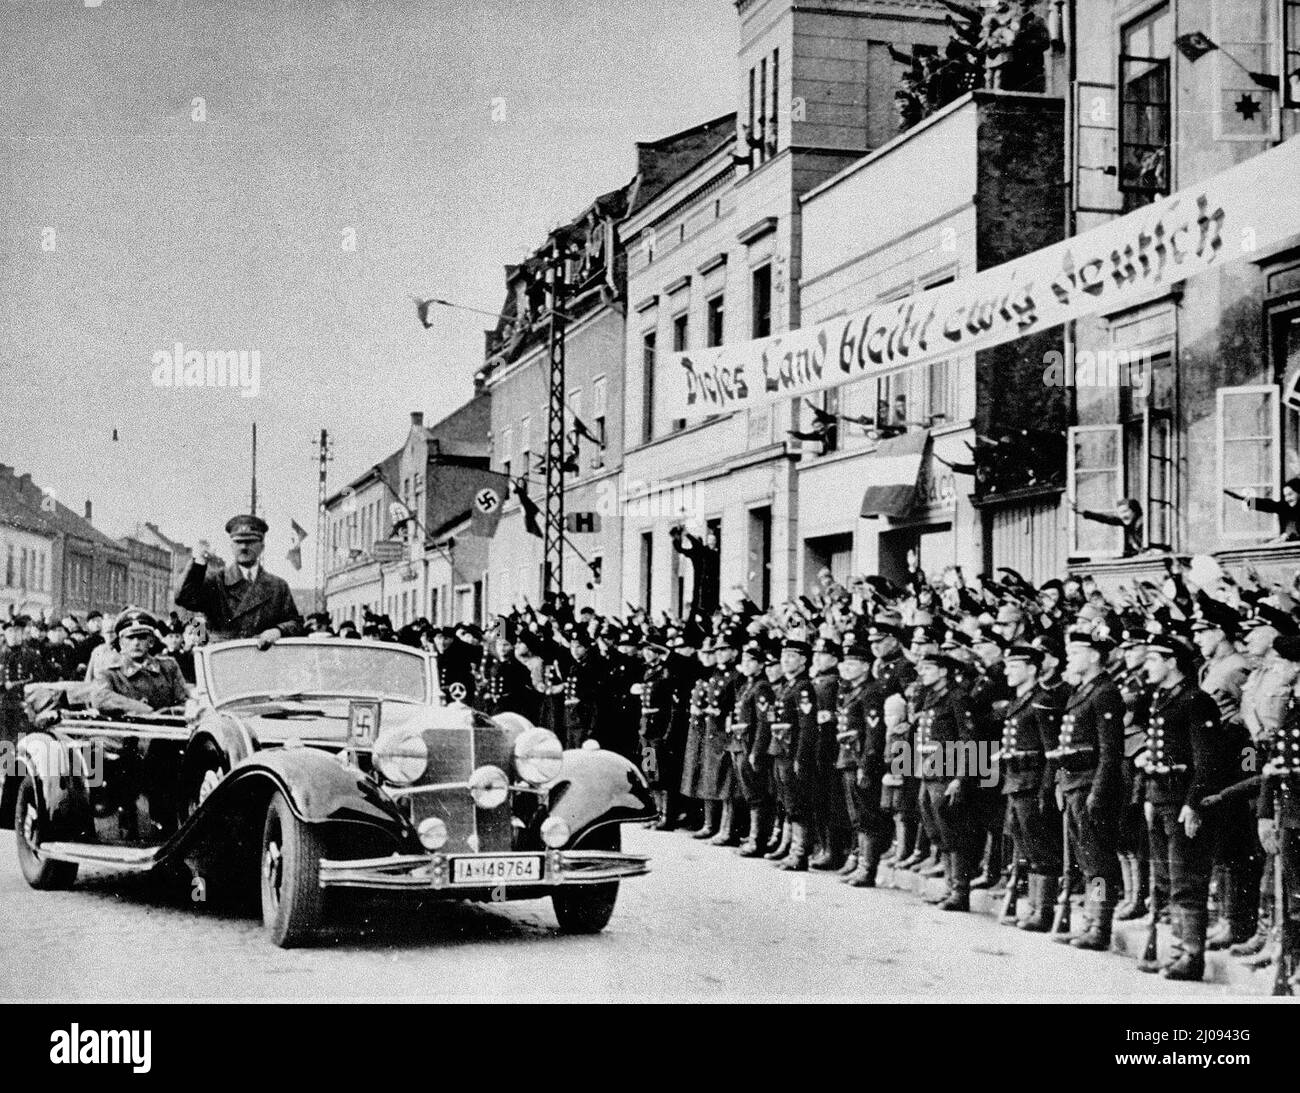 Adolf Hitler in Memel after the annexation of the Memelland Dieses Land bleibt ewig deutsch, "This land will be forever German - March 23, 1939 Stock Photo